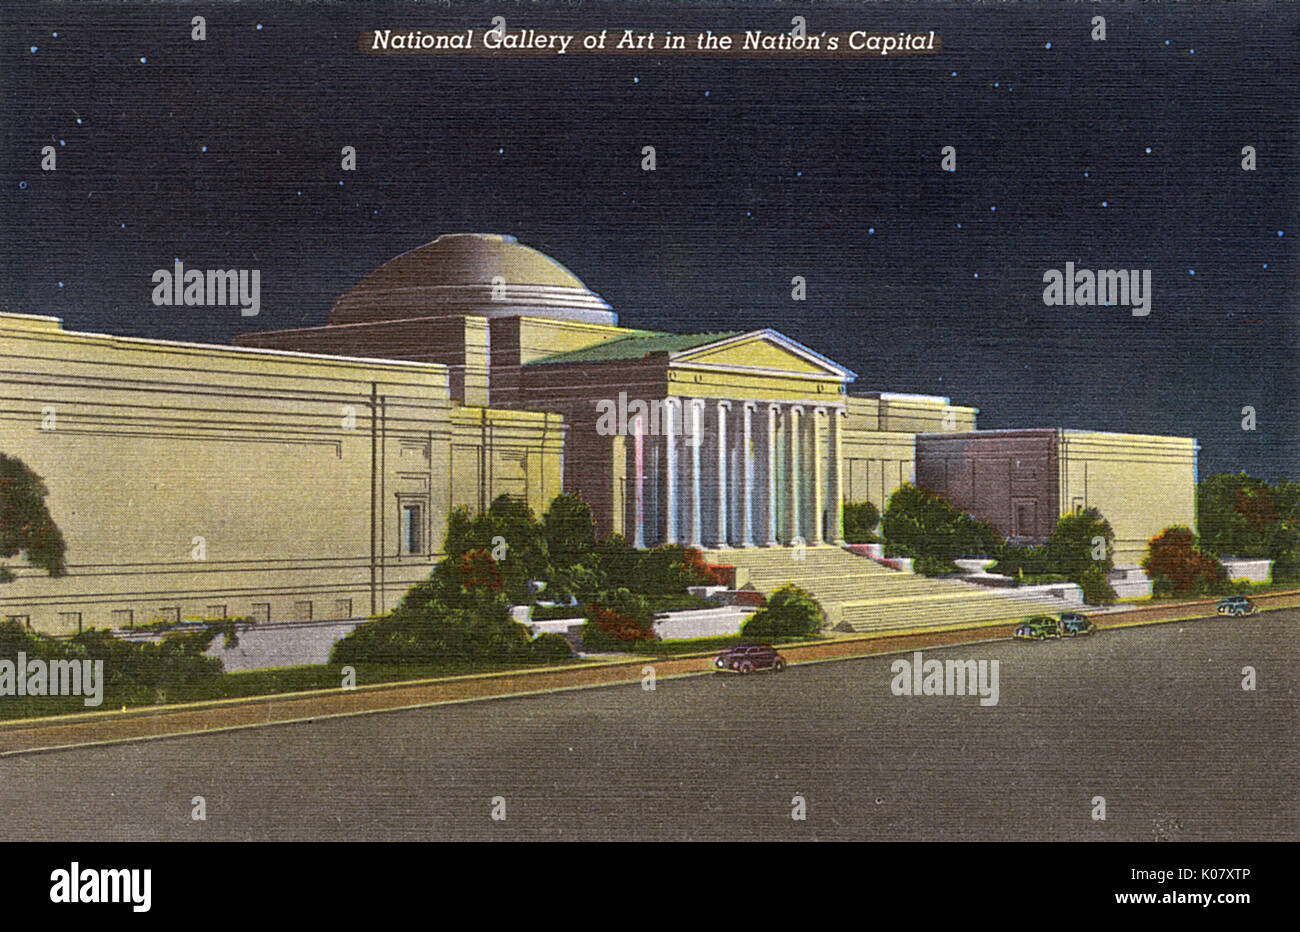 Washington DC, USA - National Gallery of Art at night Stock Photo